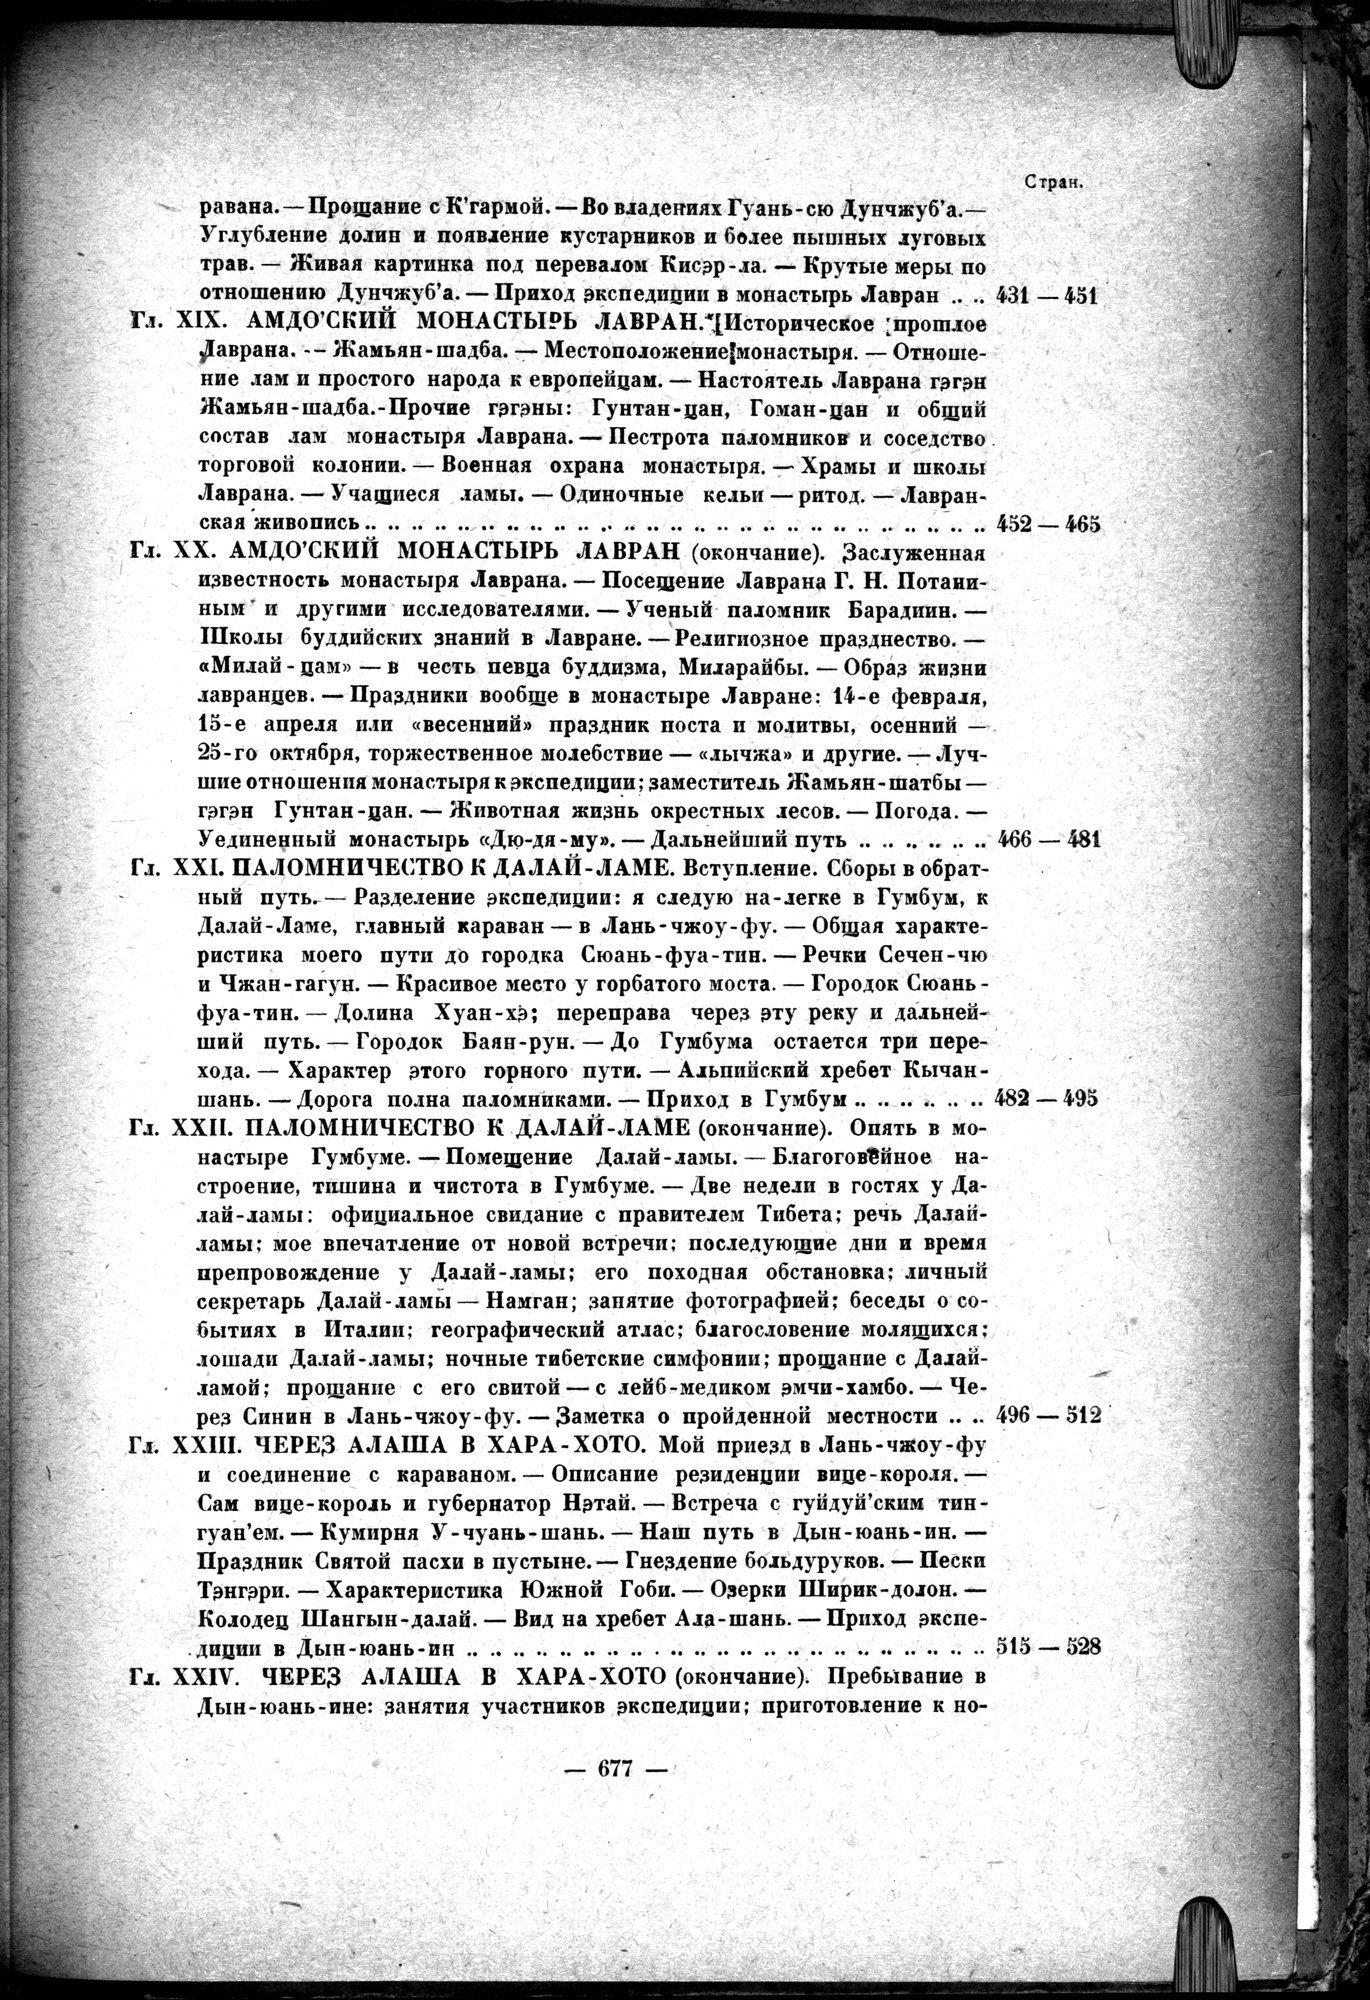 Mongoliya i Amdo i mertby gorod Khara-Khoto : vol.1 / Page 767 (Grayscale High Resolution Image)